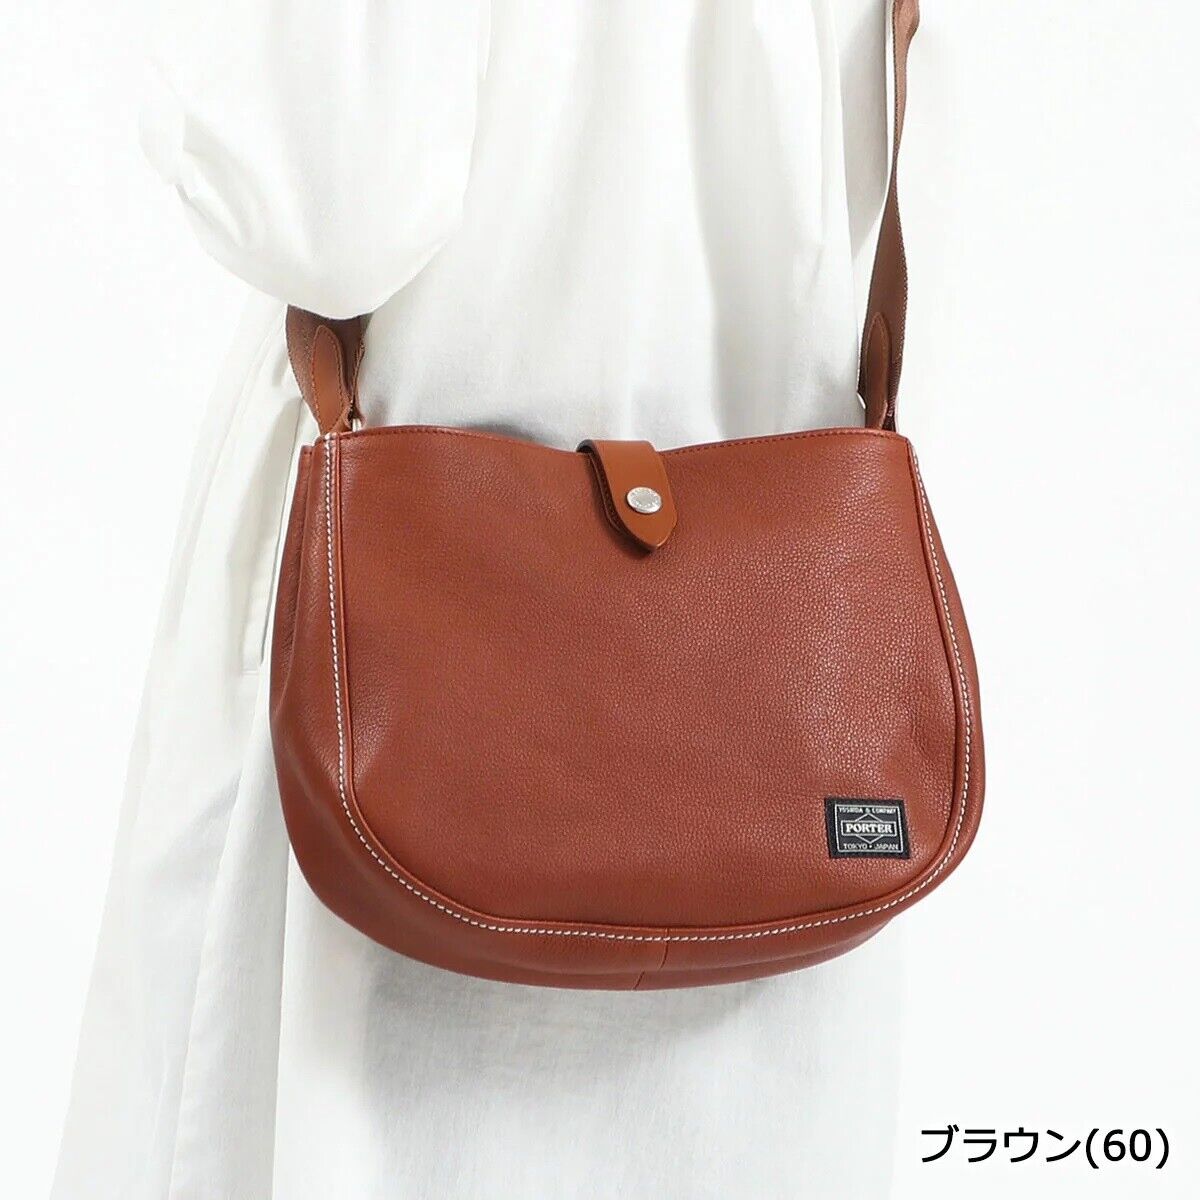 Porter Cisco shoulder bag, Yoshida bag, brown, crossbody bag, leather, Japan